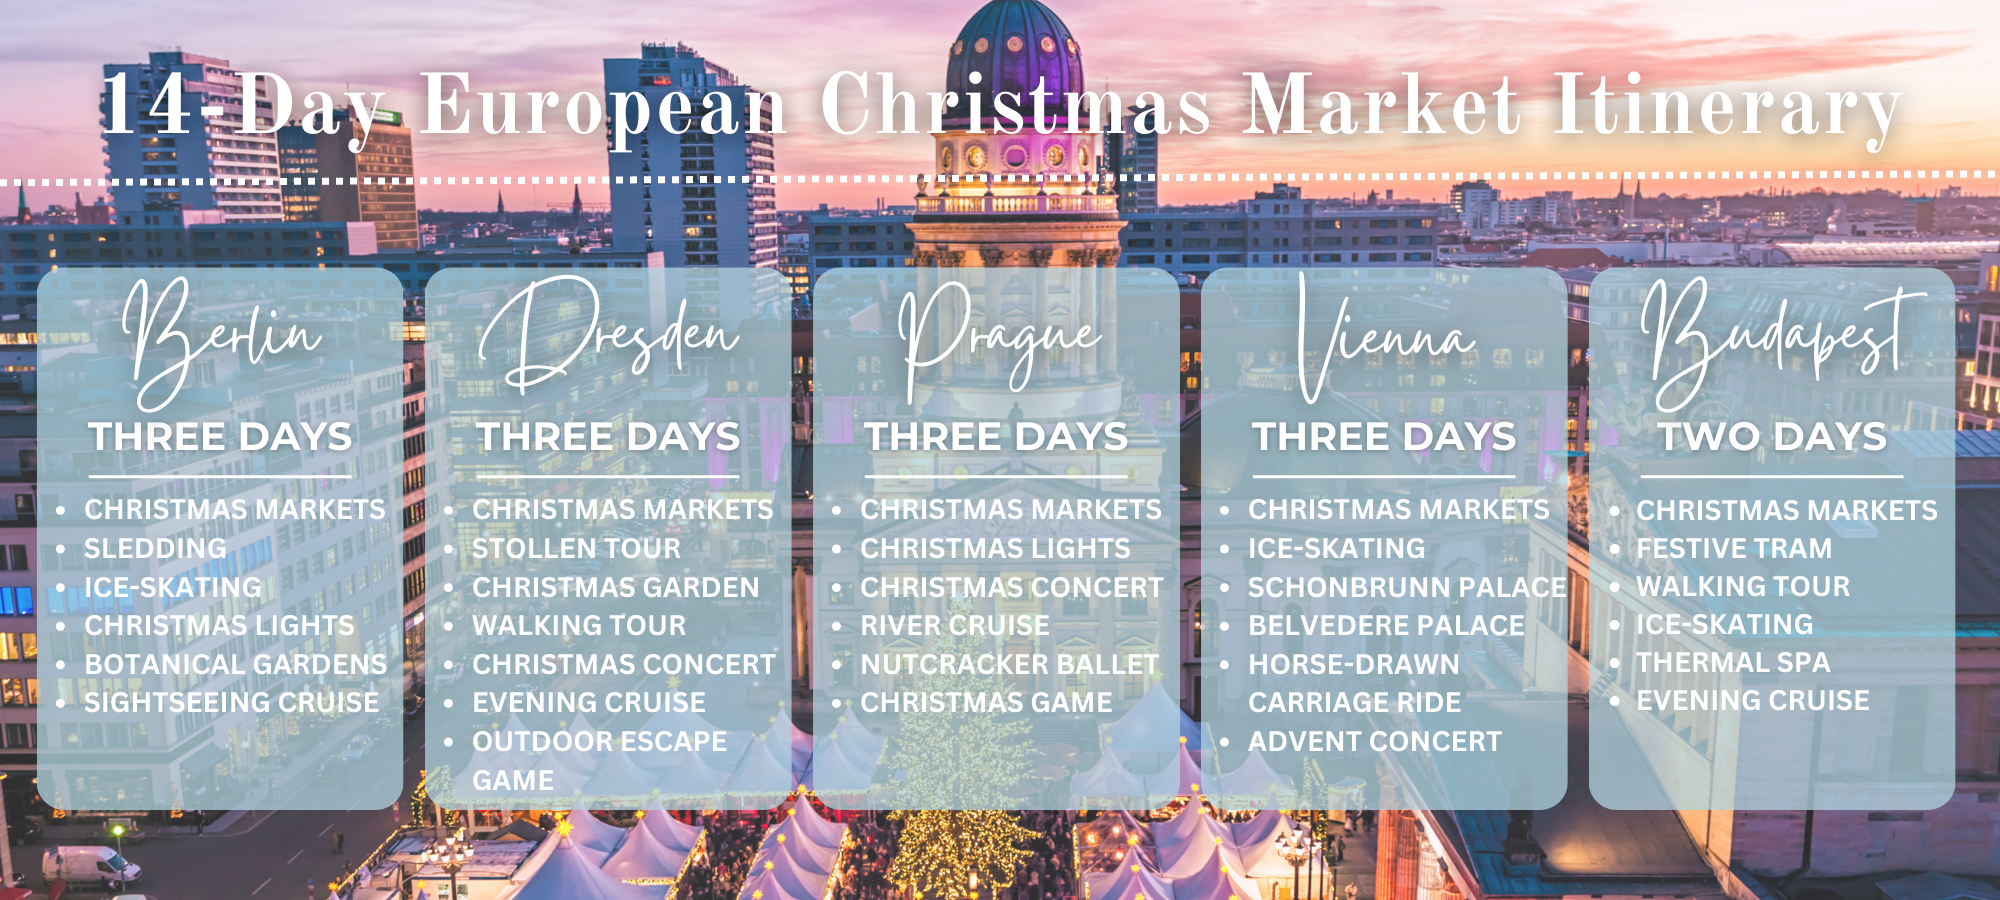 European Christmas Market Itinerary